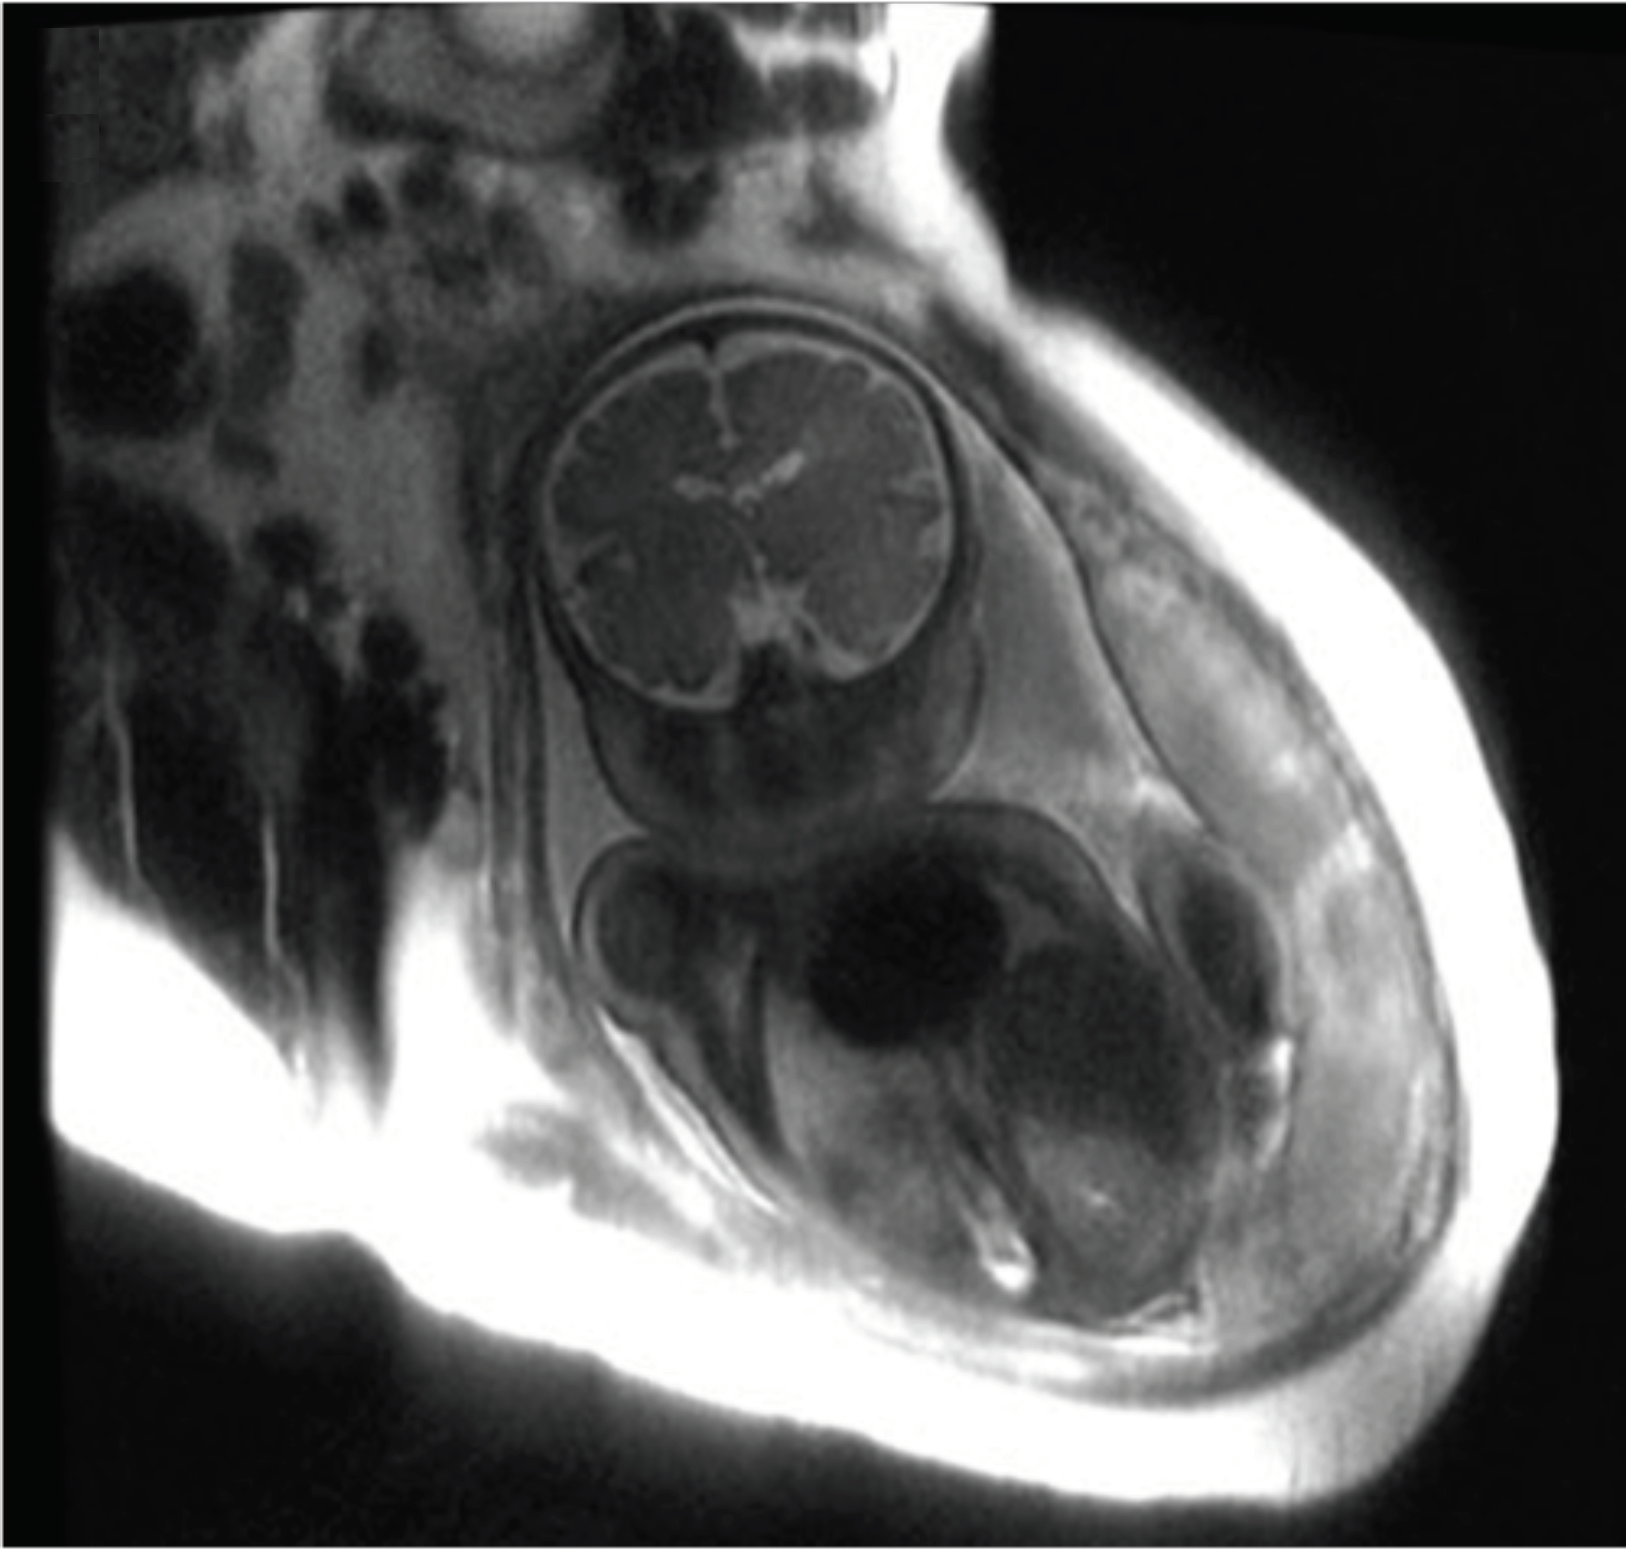 Fetal brain MRI acquired by research team